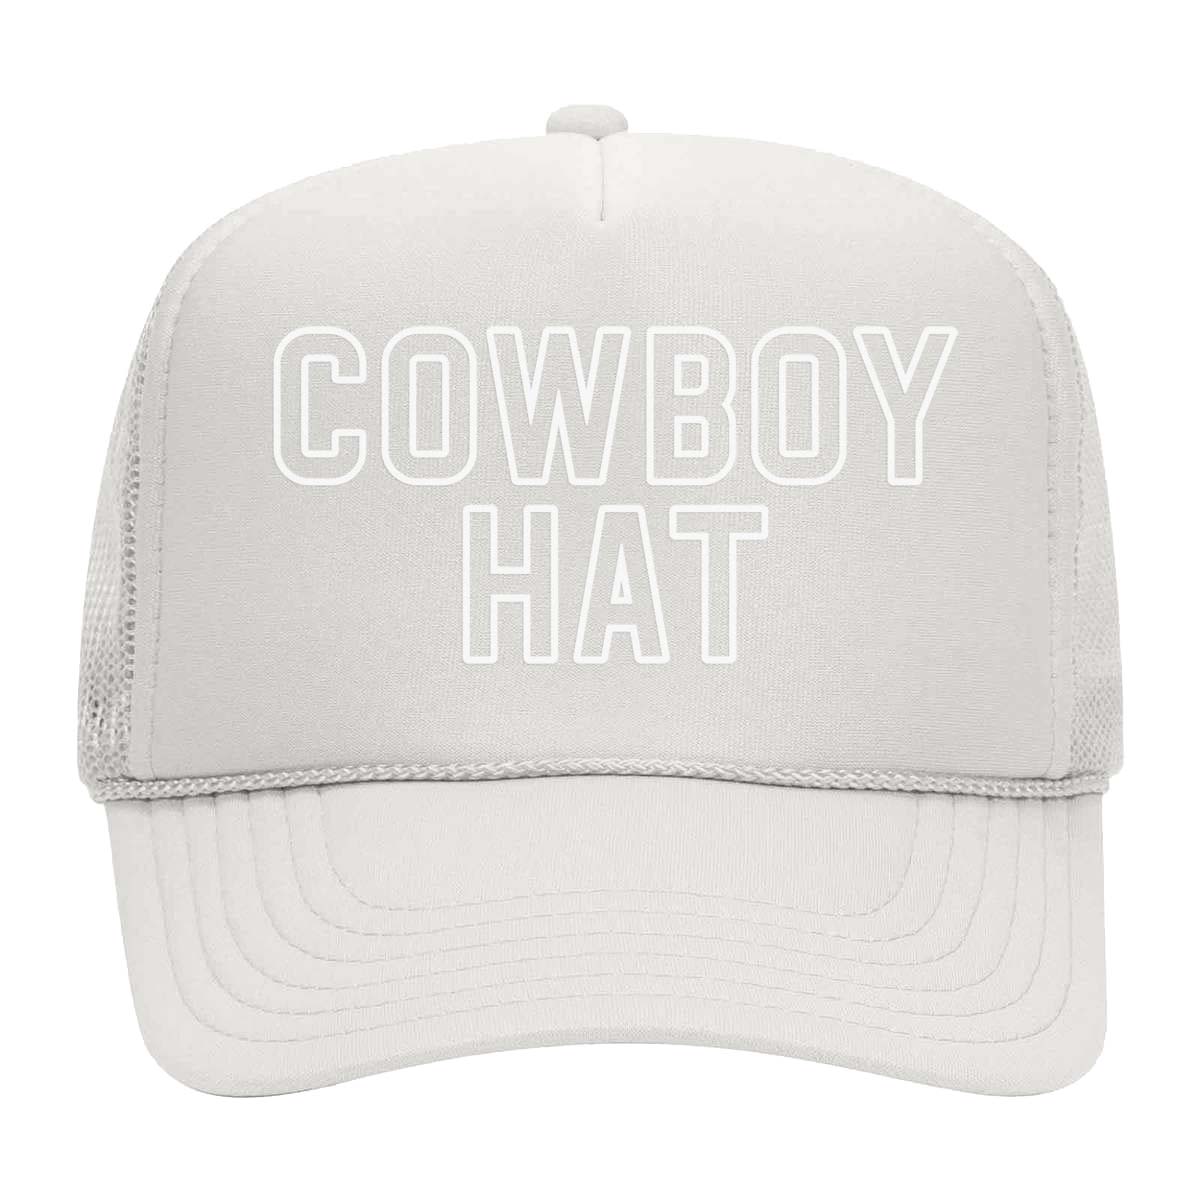 cowboy hats snapbacks